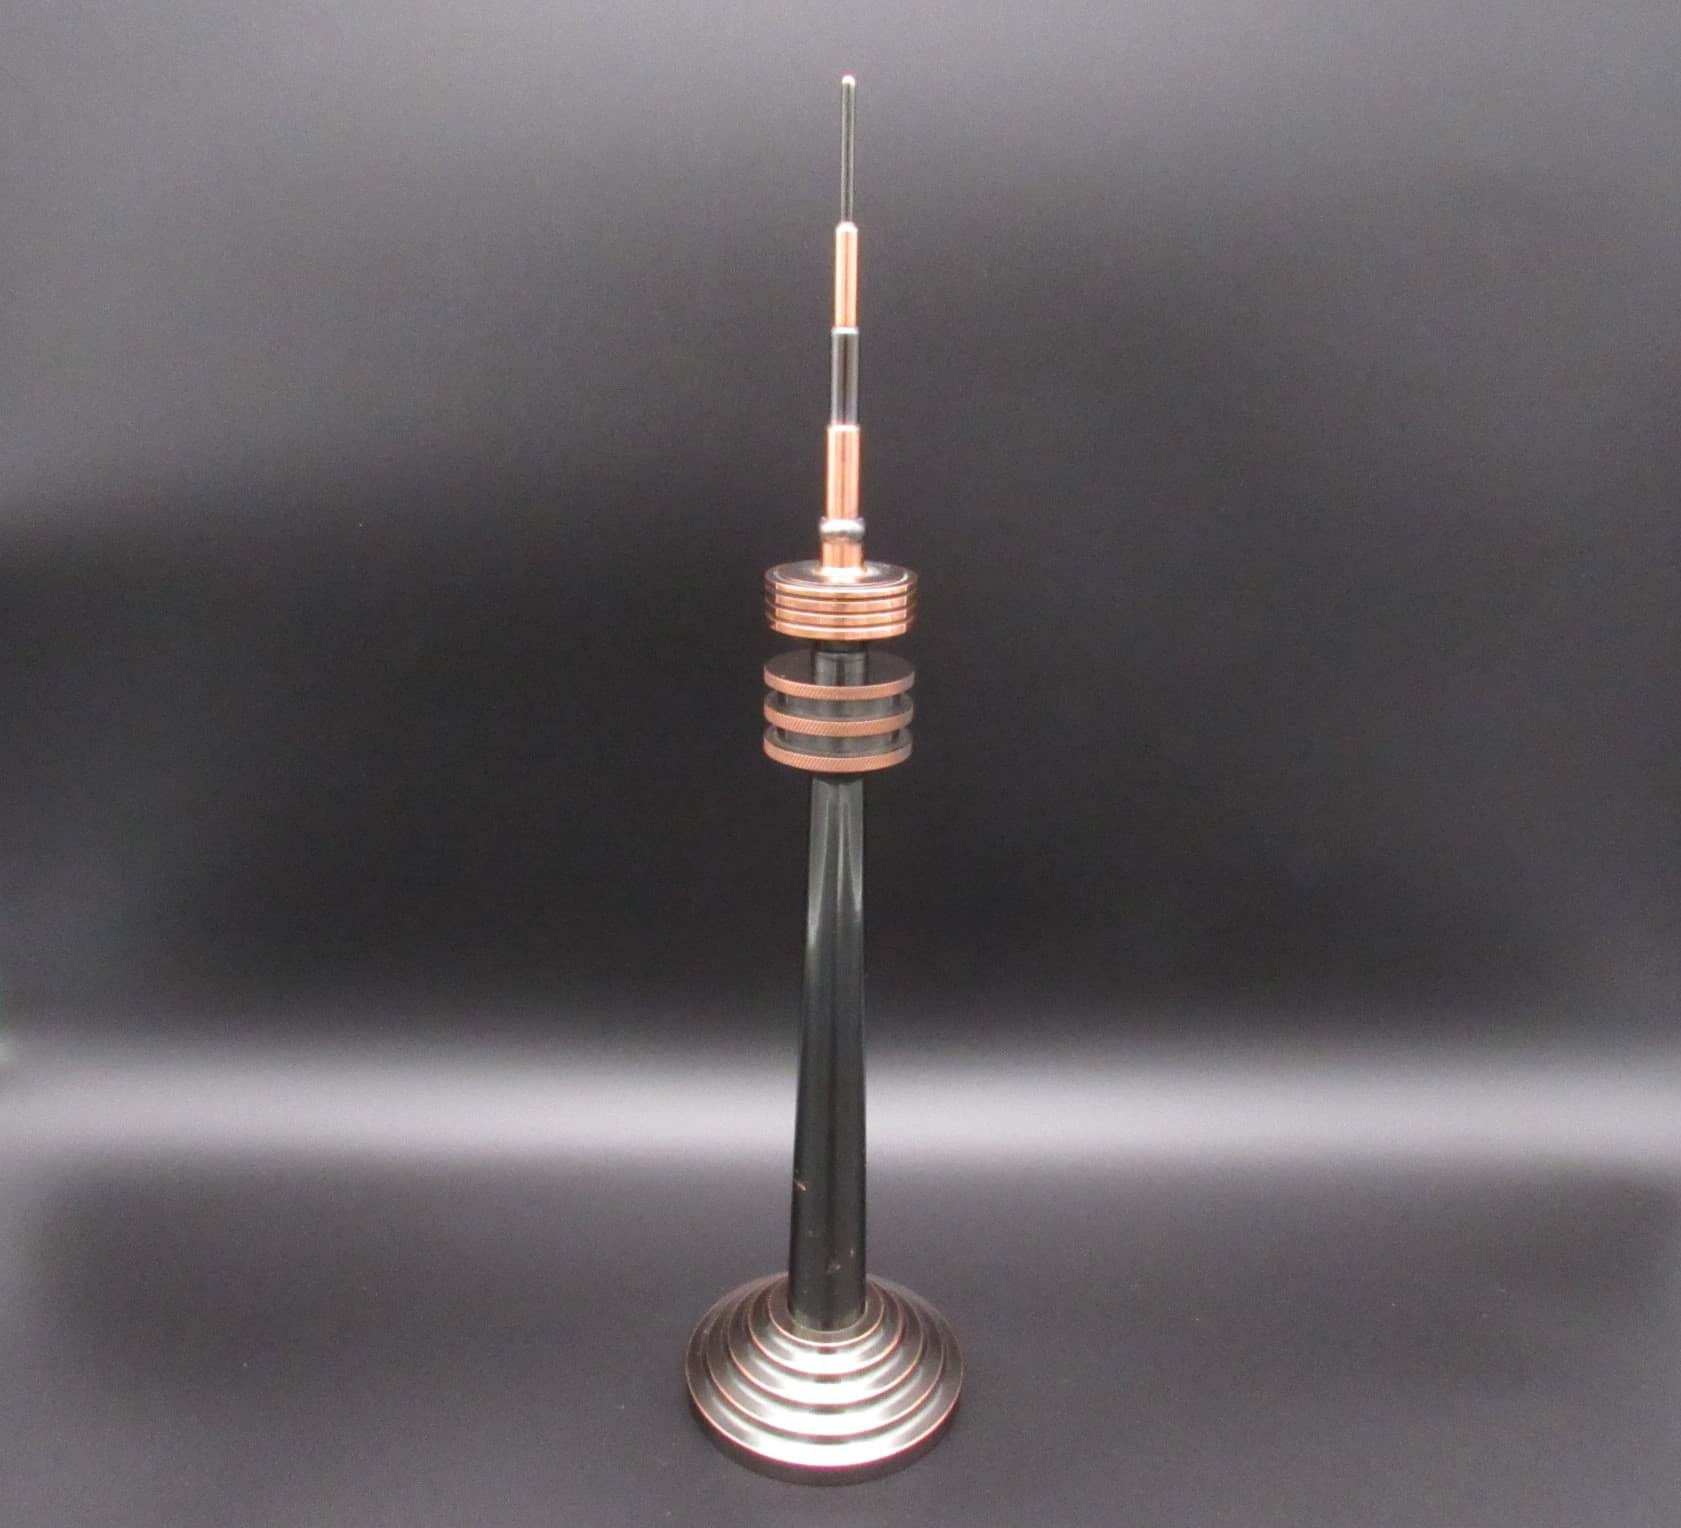 Picture of Miniatur Fernsehturm / Funkturm aus Metall, Kunsthandwerk, 32 cm